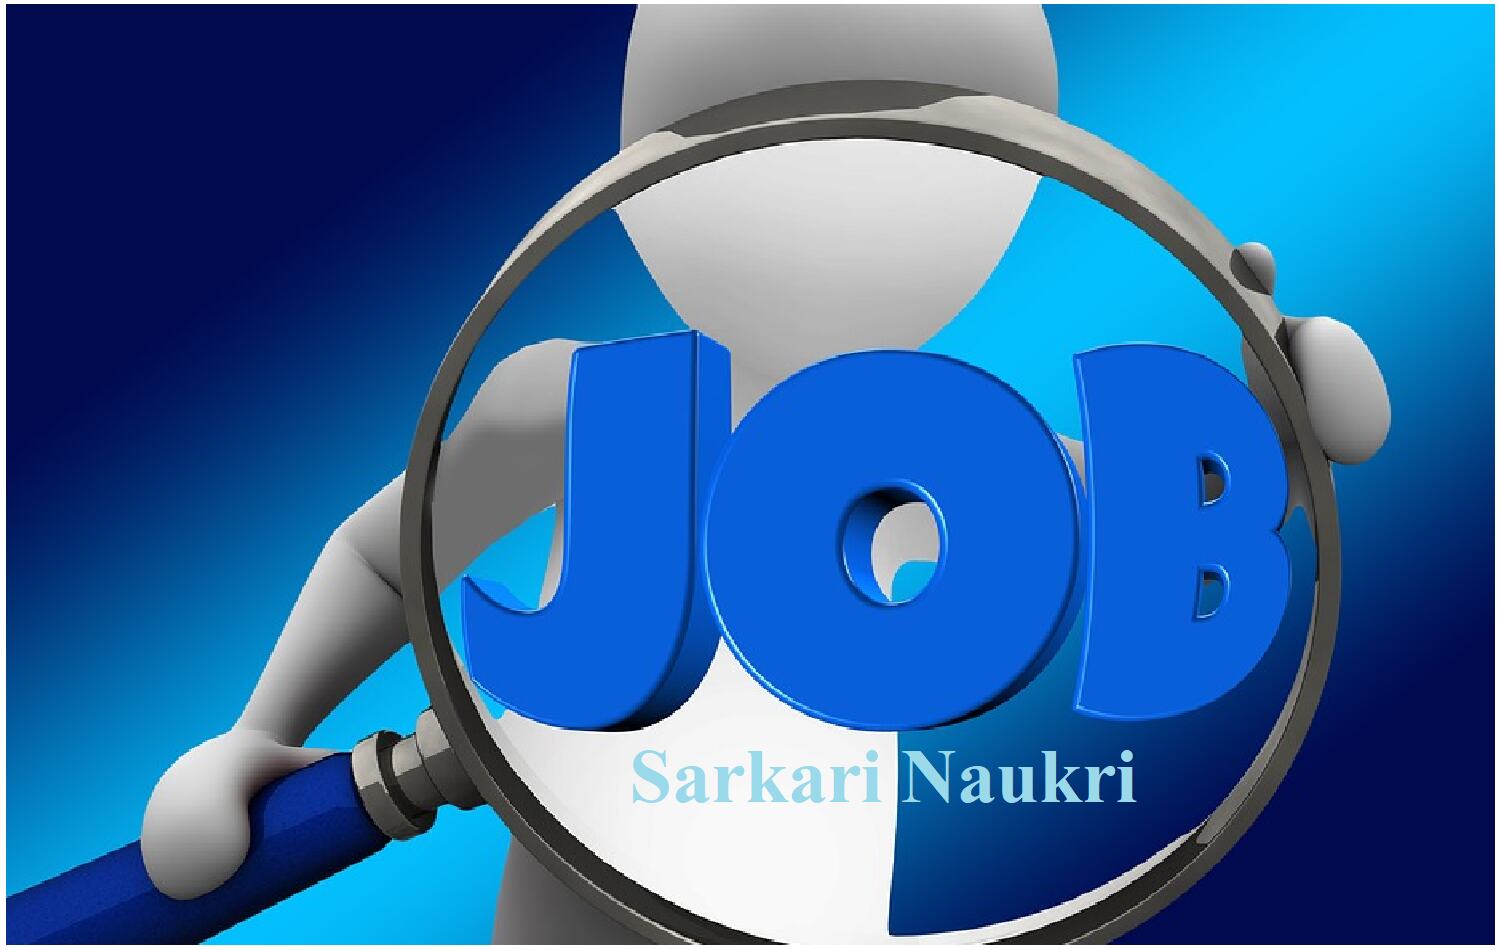 Sarkari Naukri: Recruitment for the posts of Assistant Professor in Public Service Commission